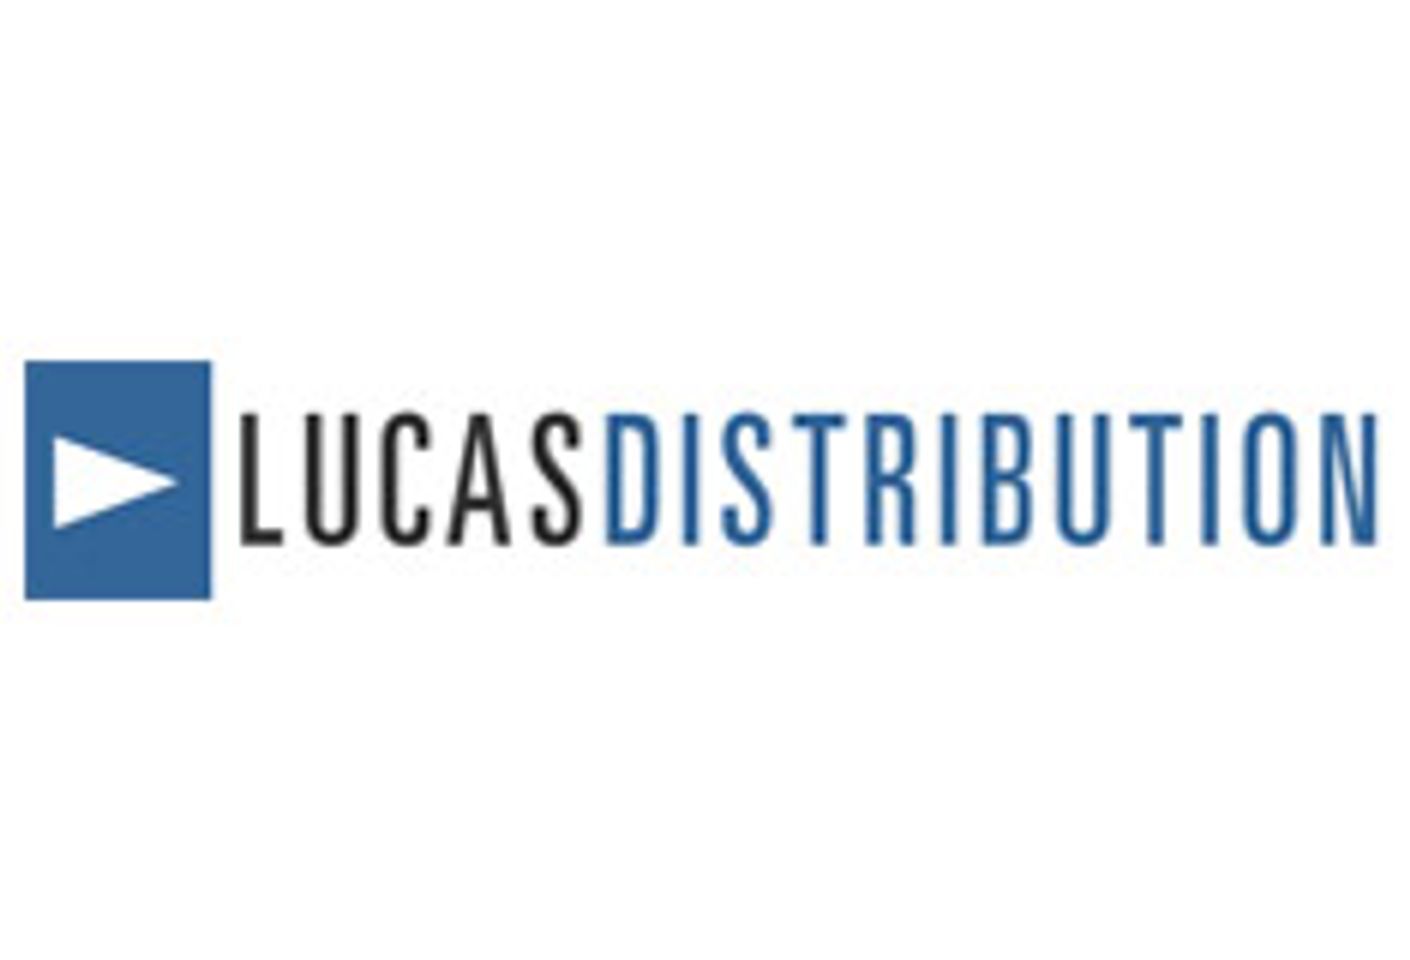 Company Profile: Lucas Distribution